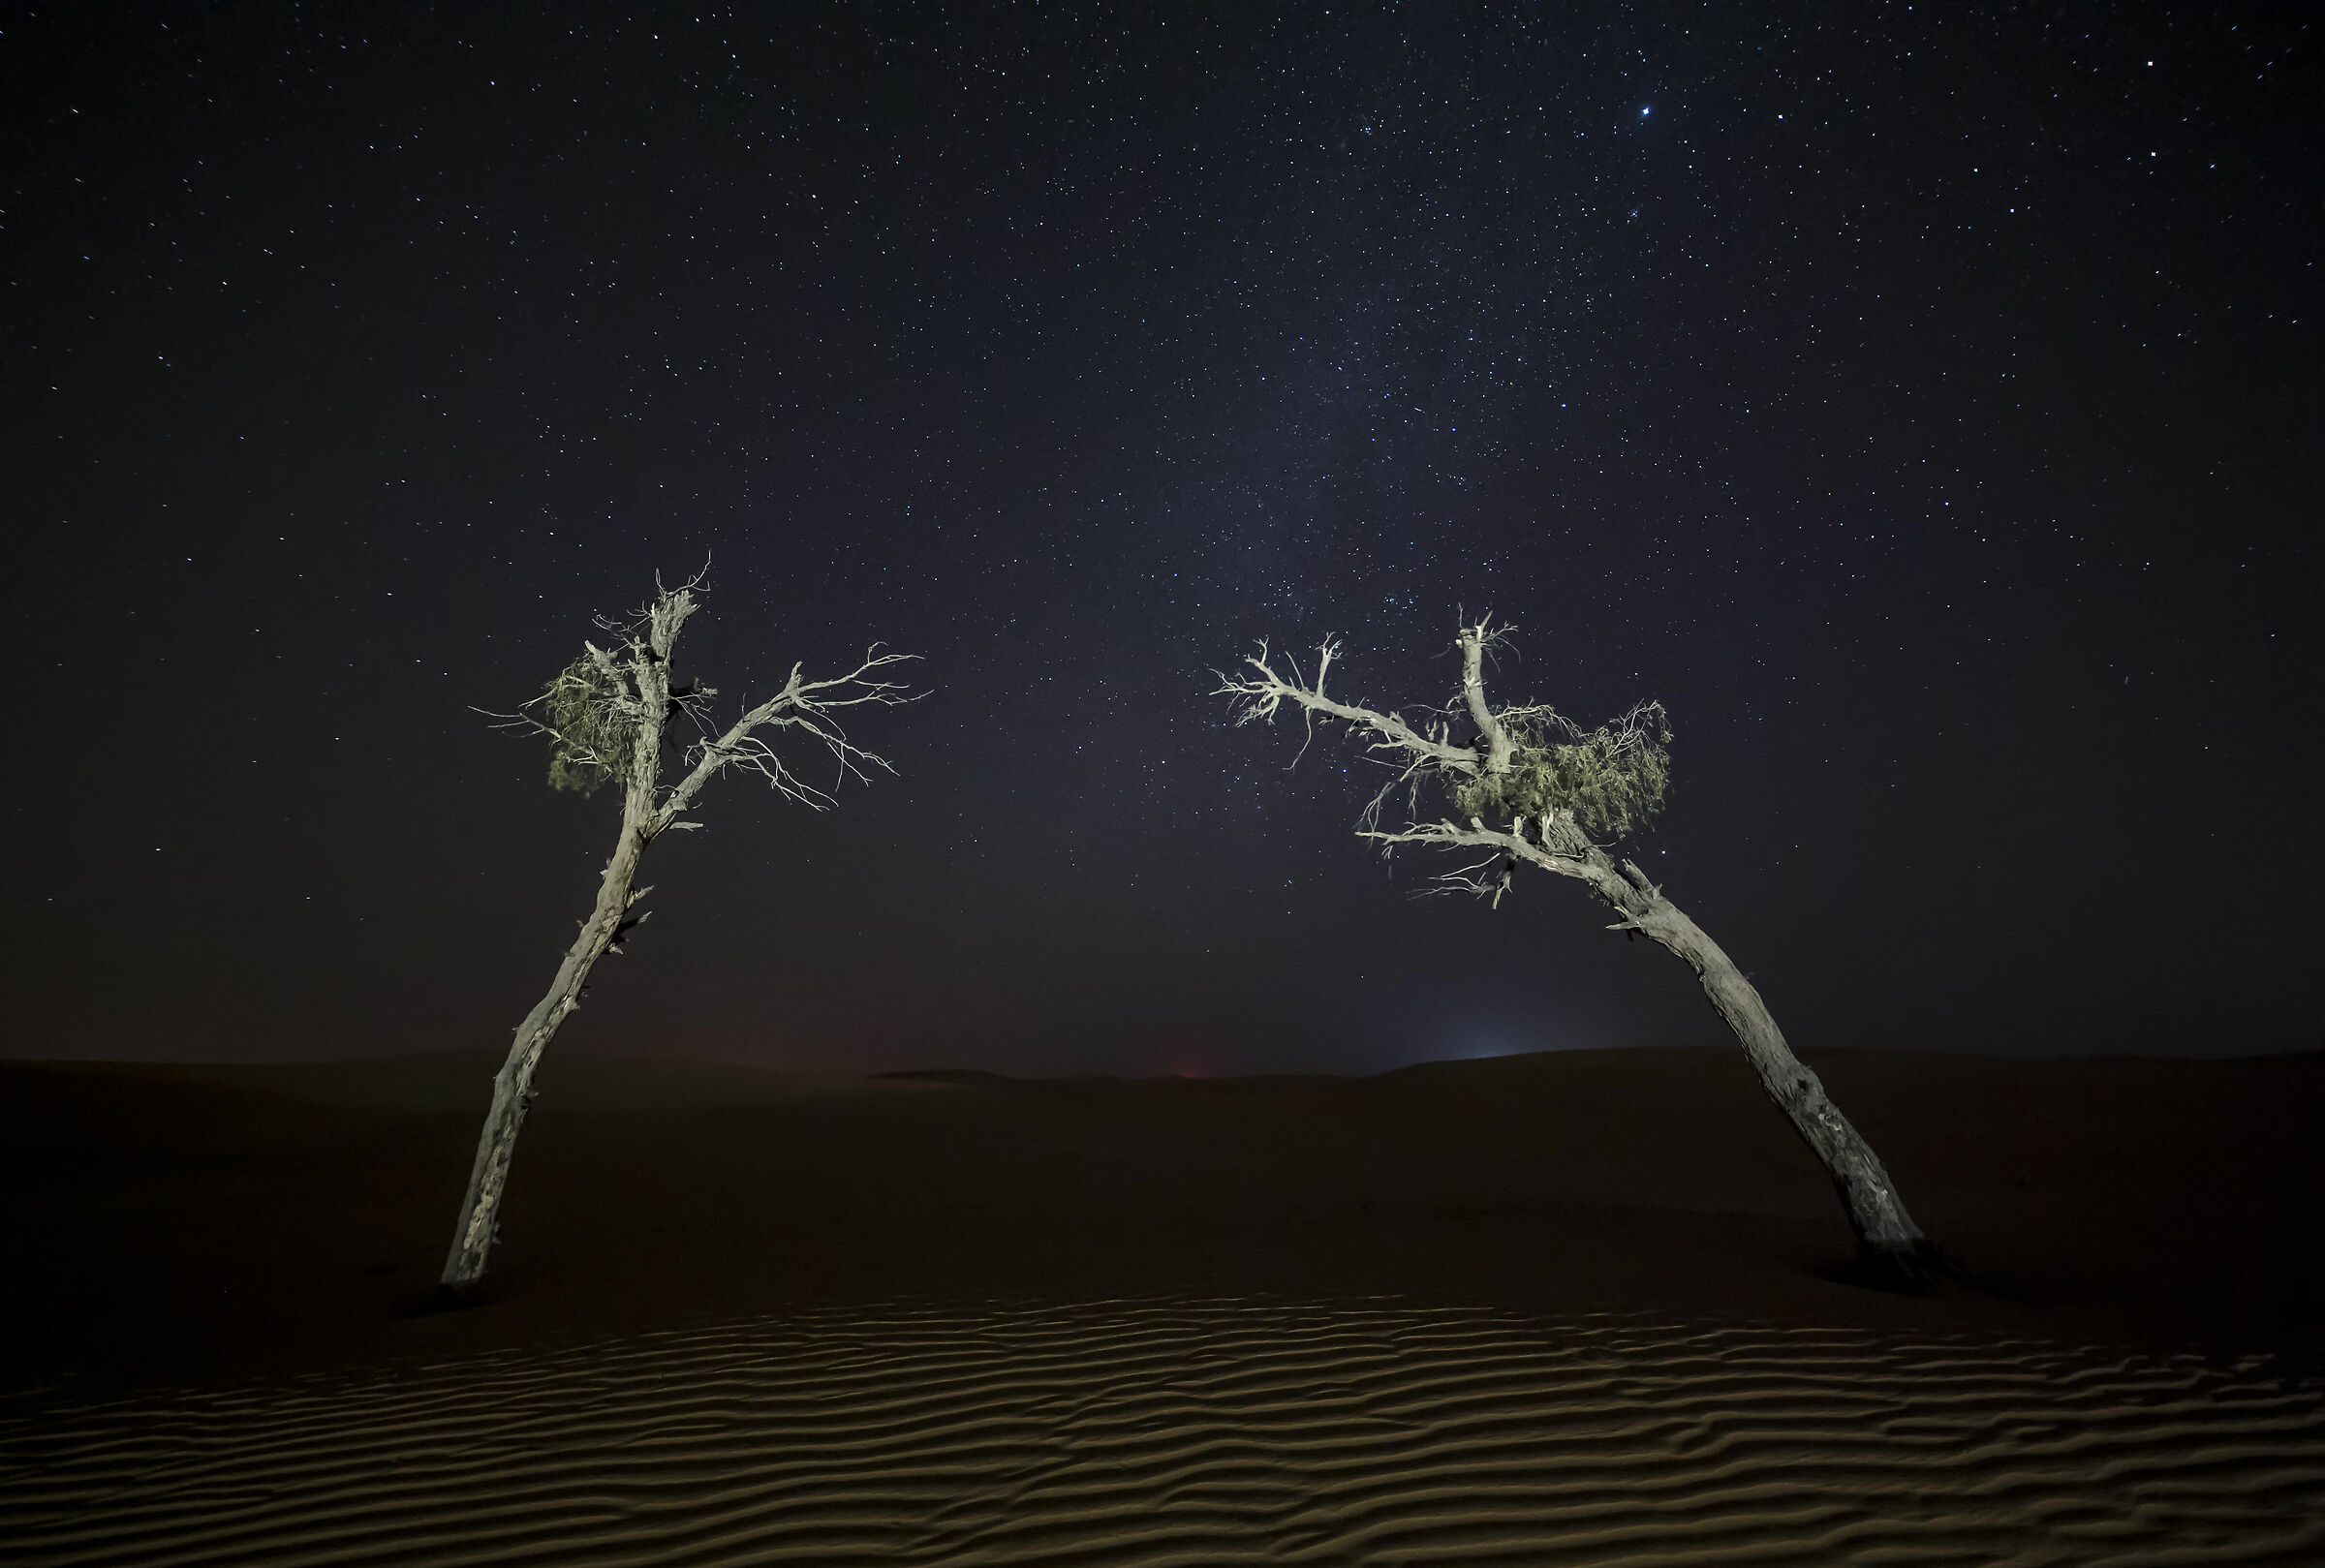 Night in the desert...